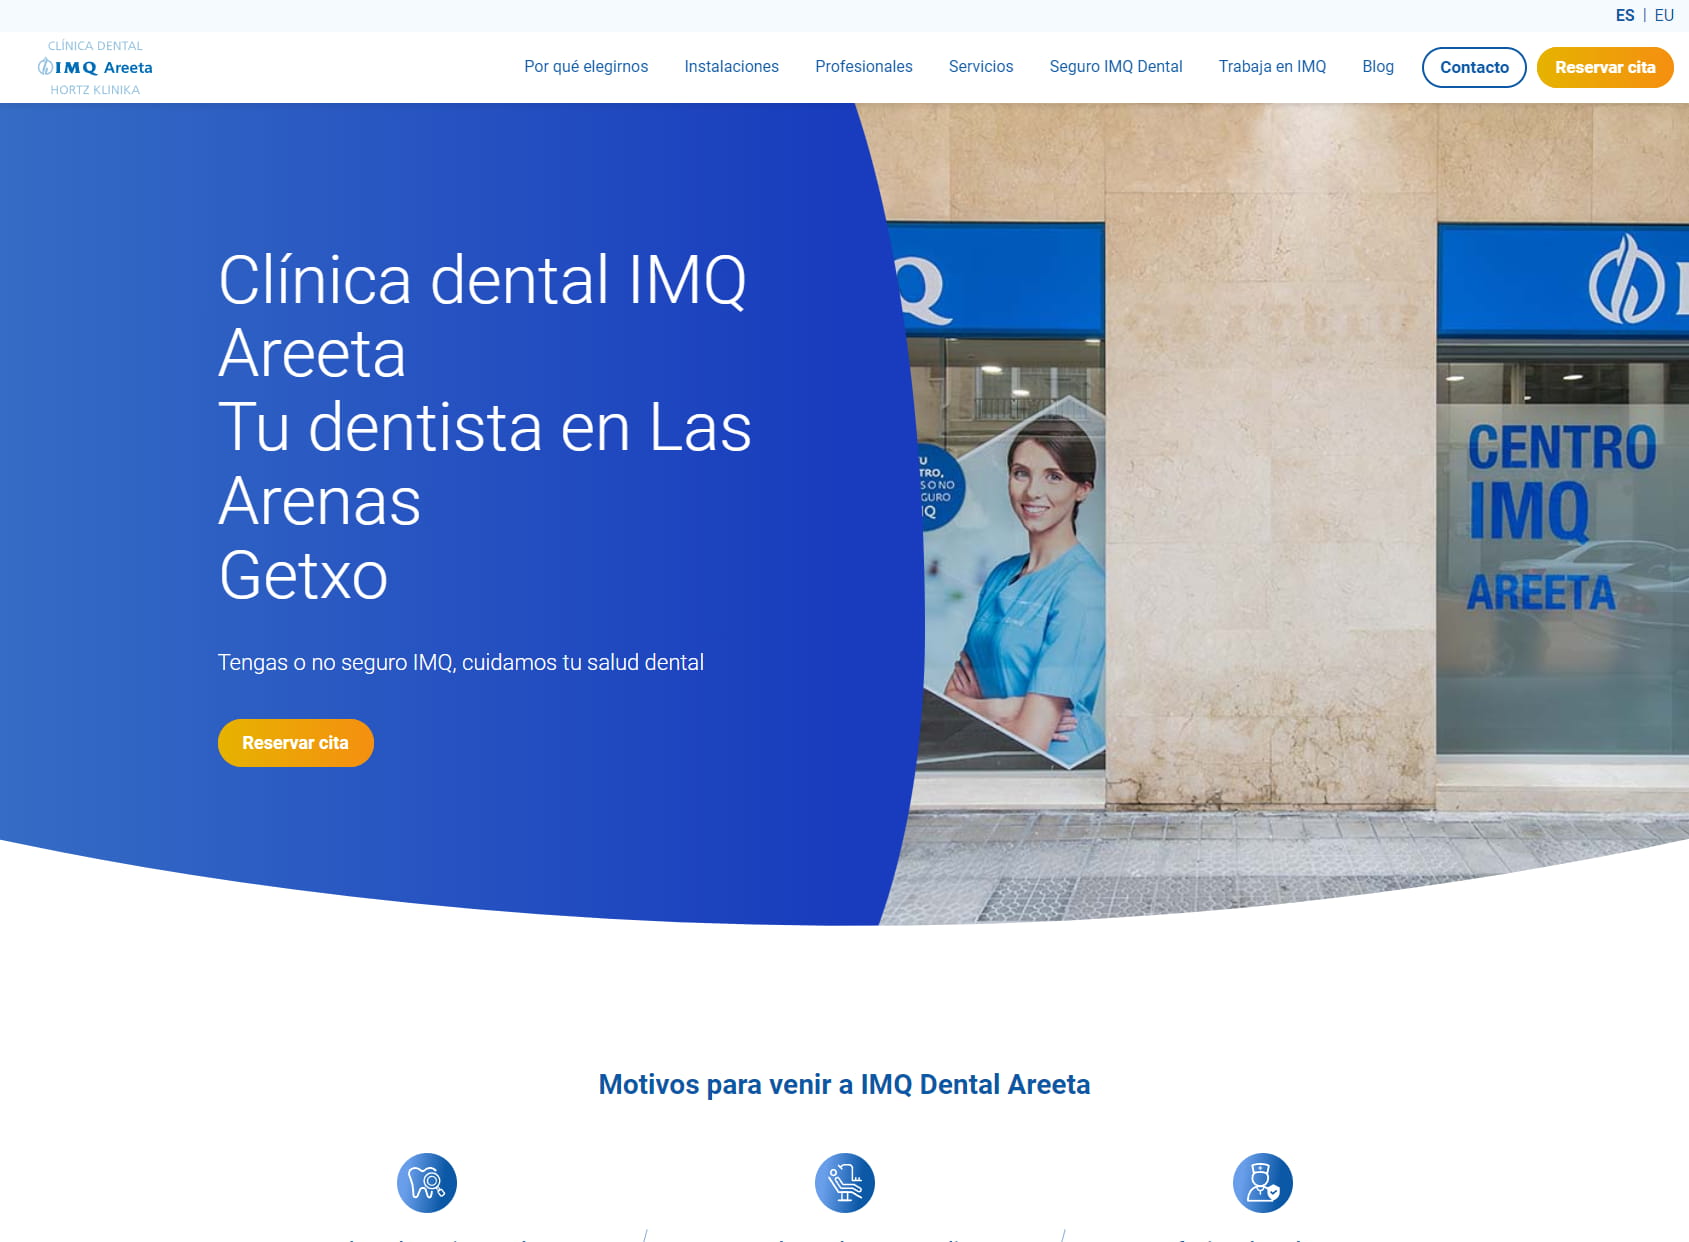 IMQ Areeta Clínica Dental, Centro de Rehabilitación y Análisis Clínicos